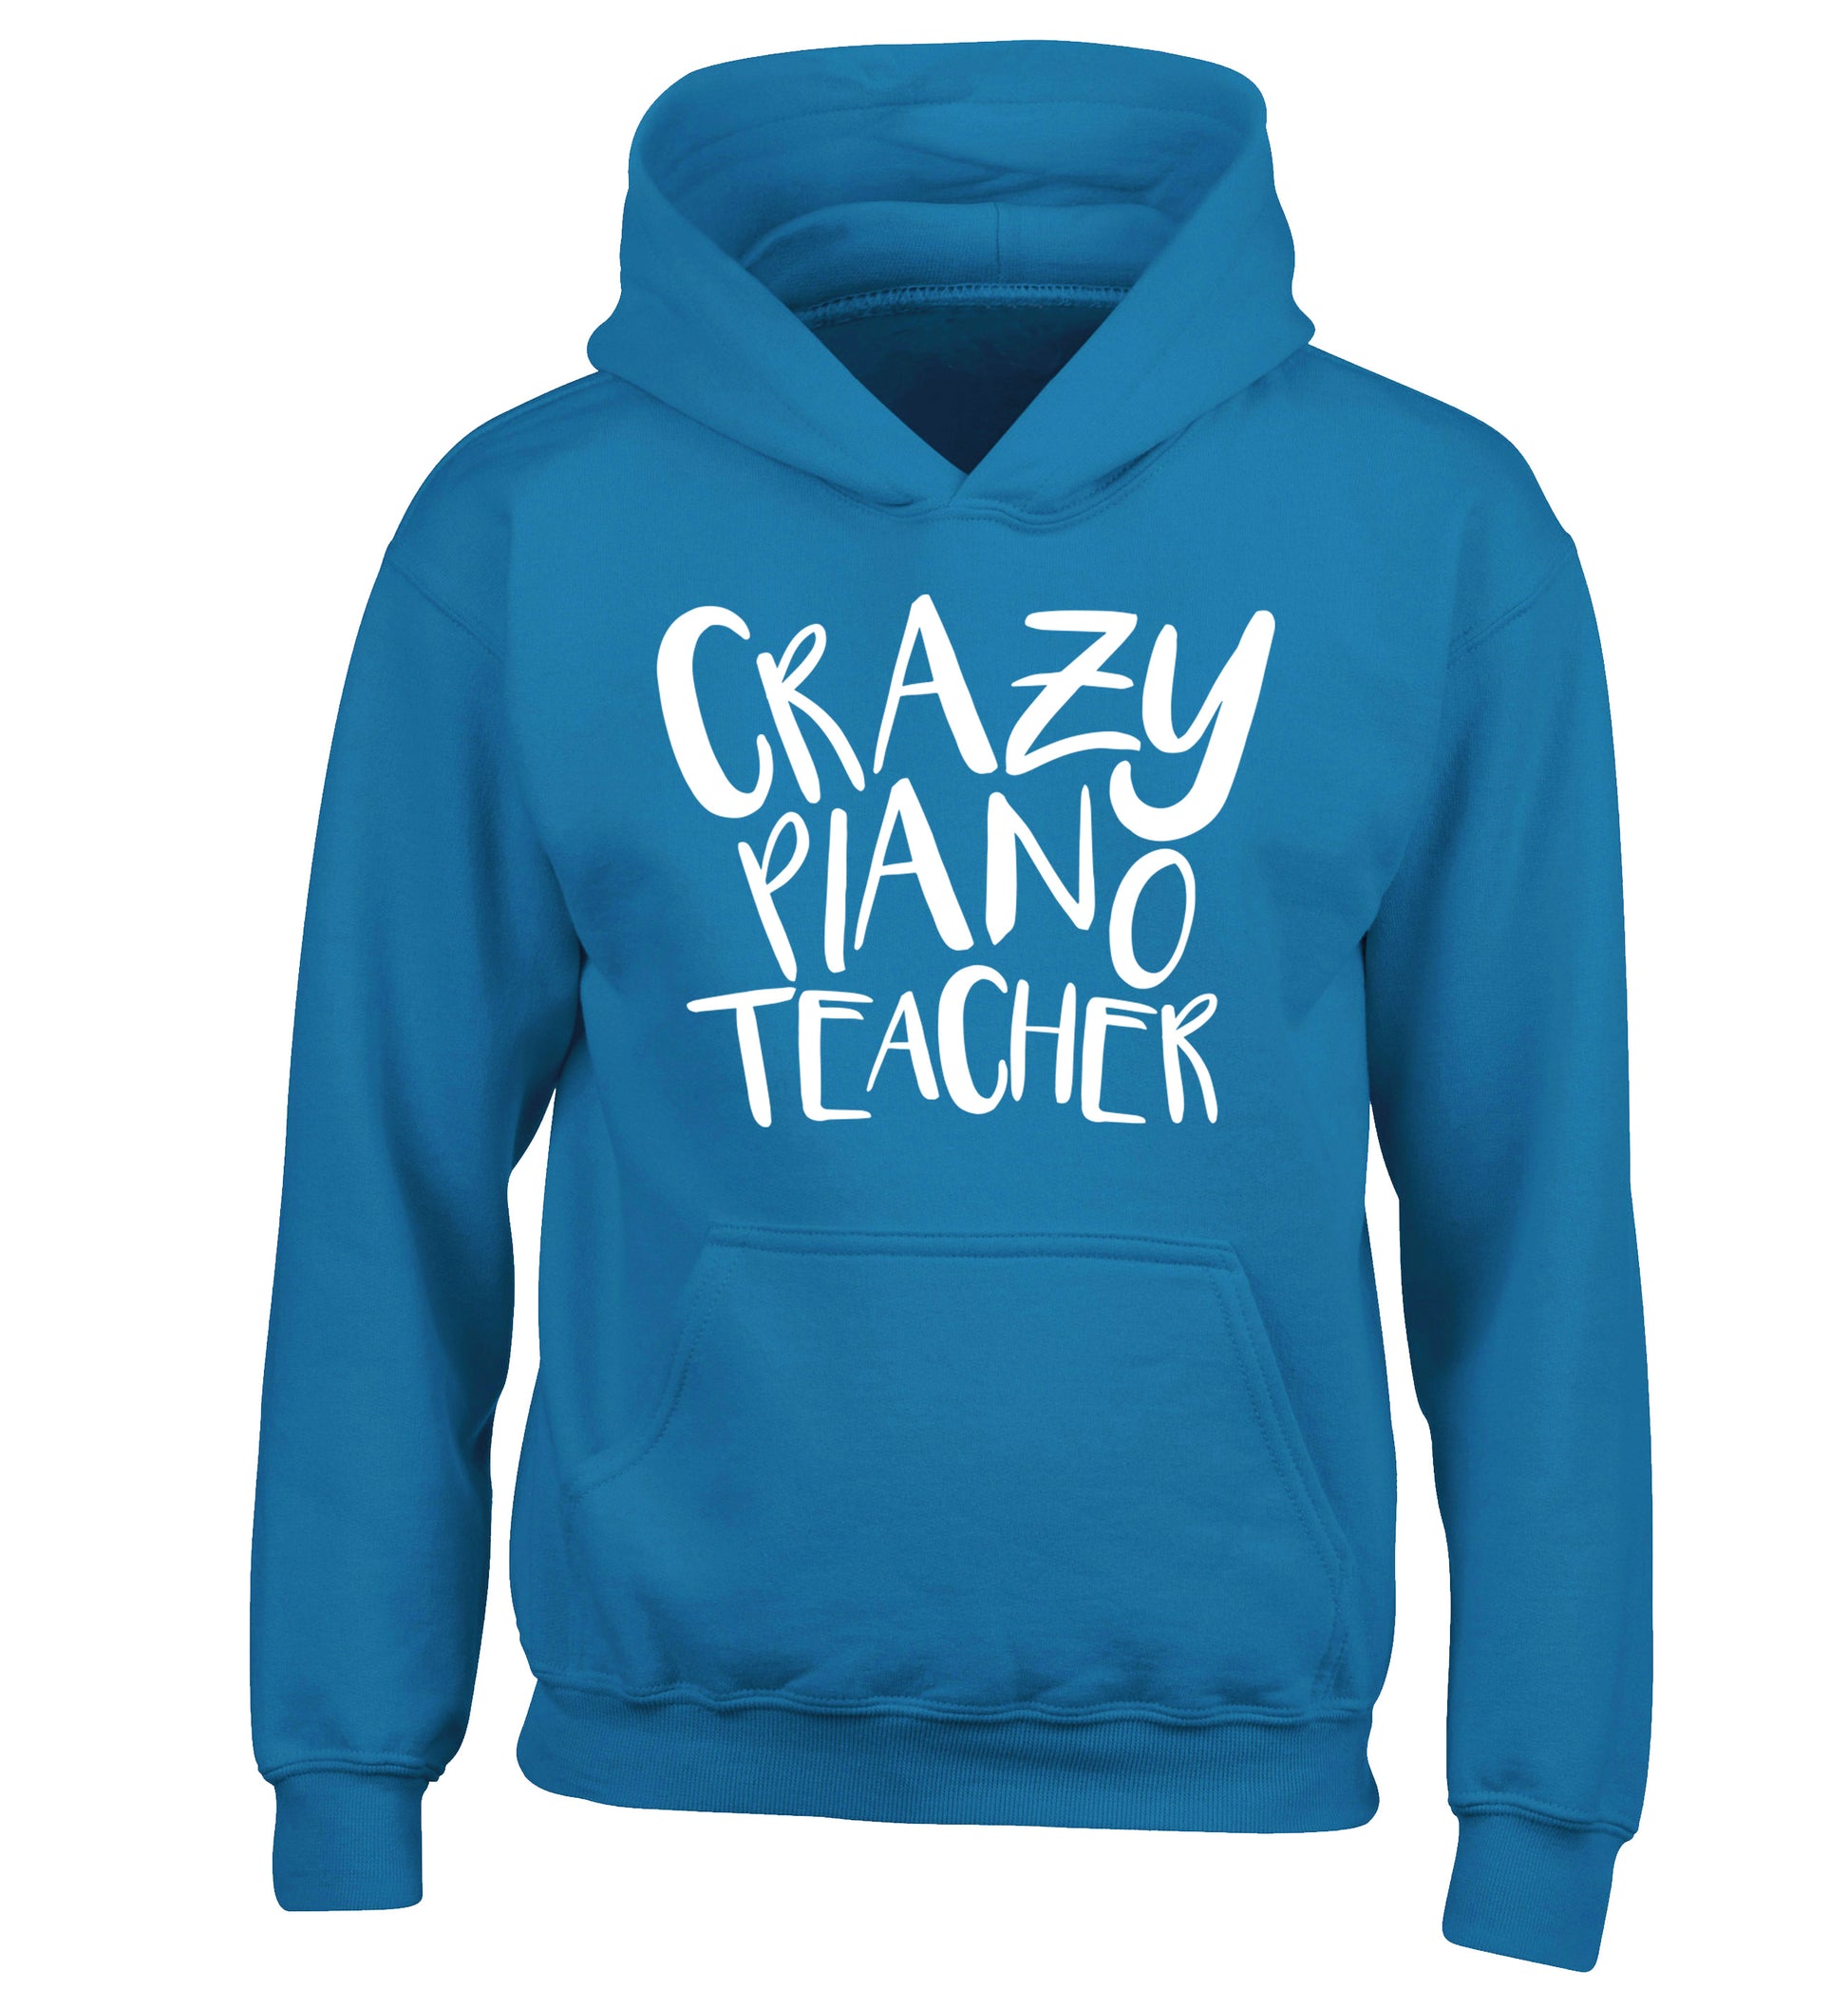 Crazy piano teacher children's blue hoodie 12-13 Years